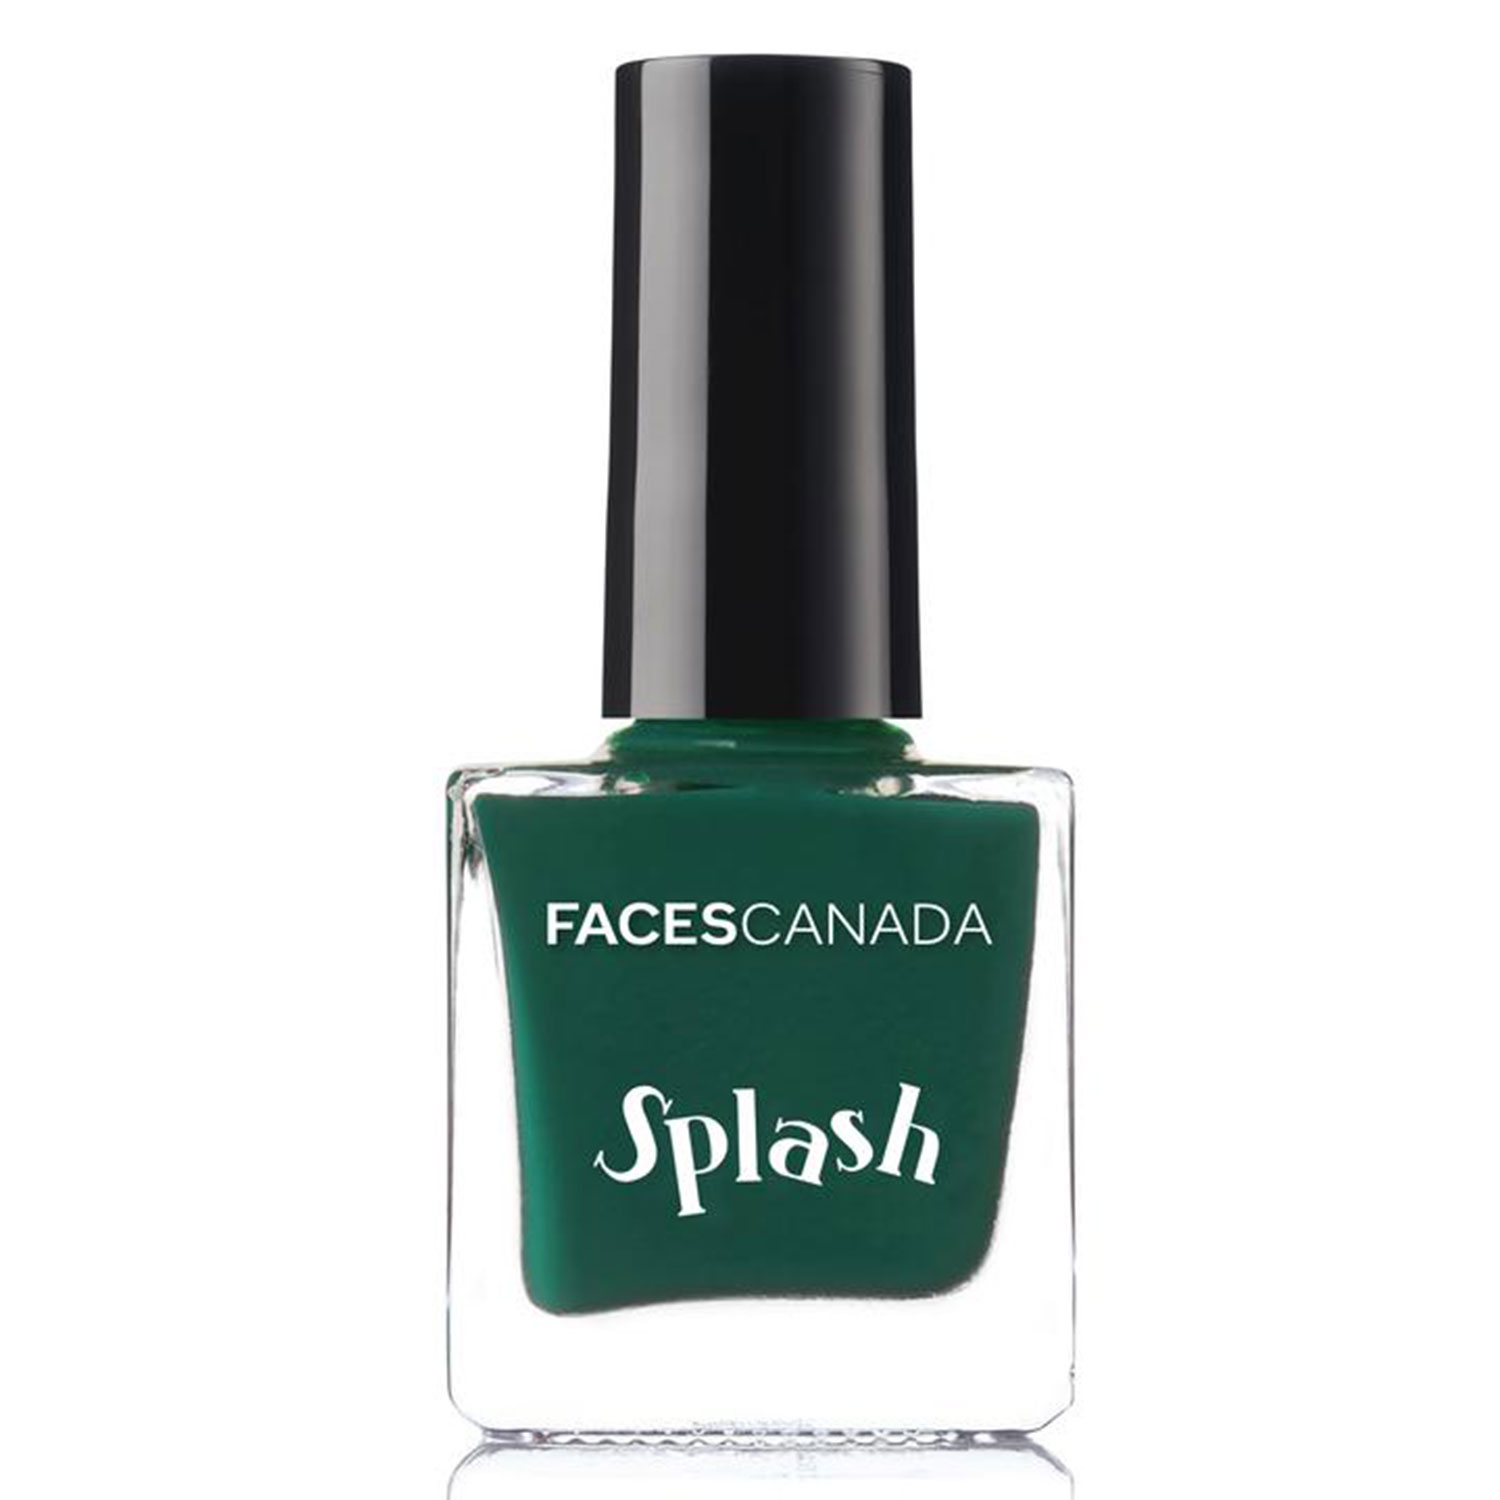 Faces Canada Splash Nail Enamel, 8ml-Tropical Green 59